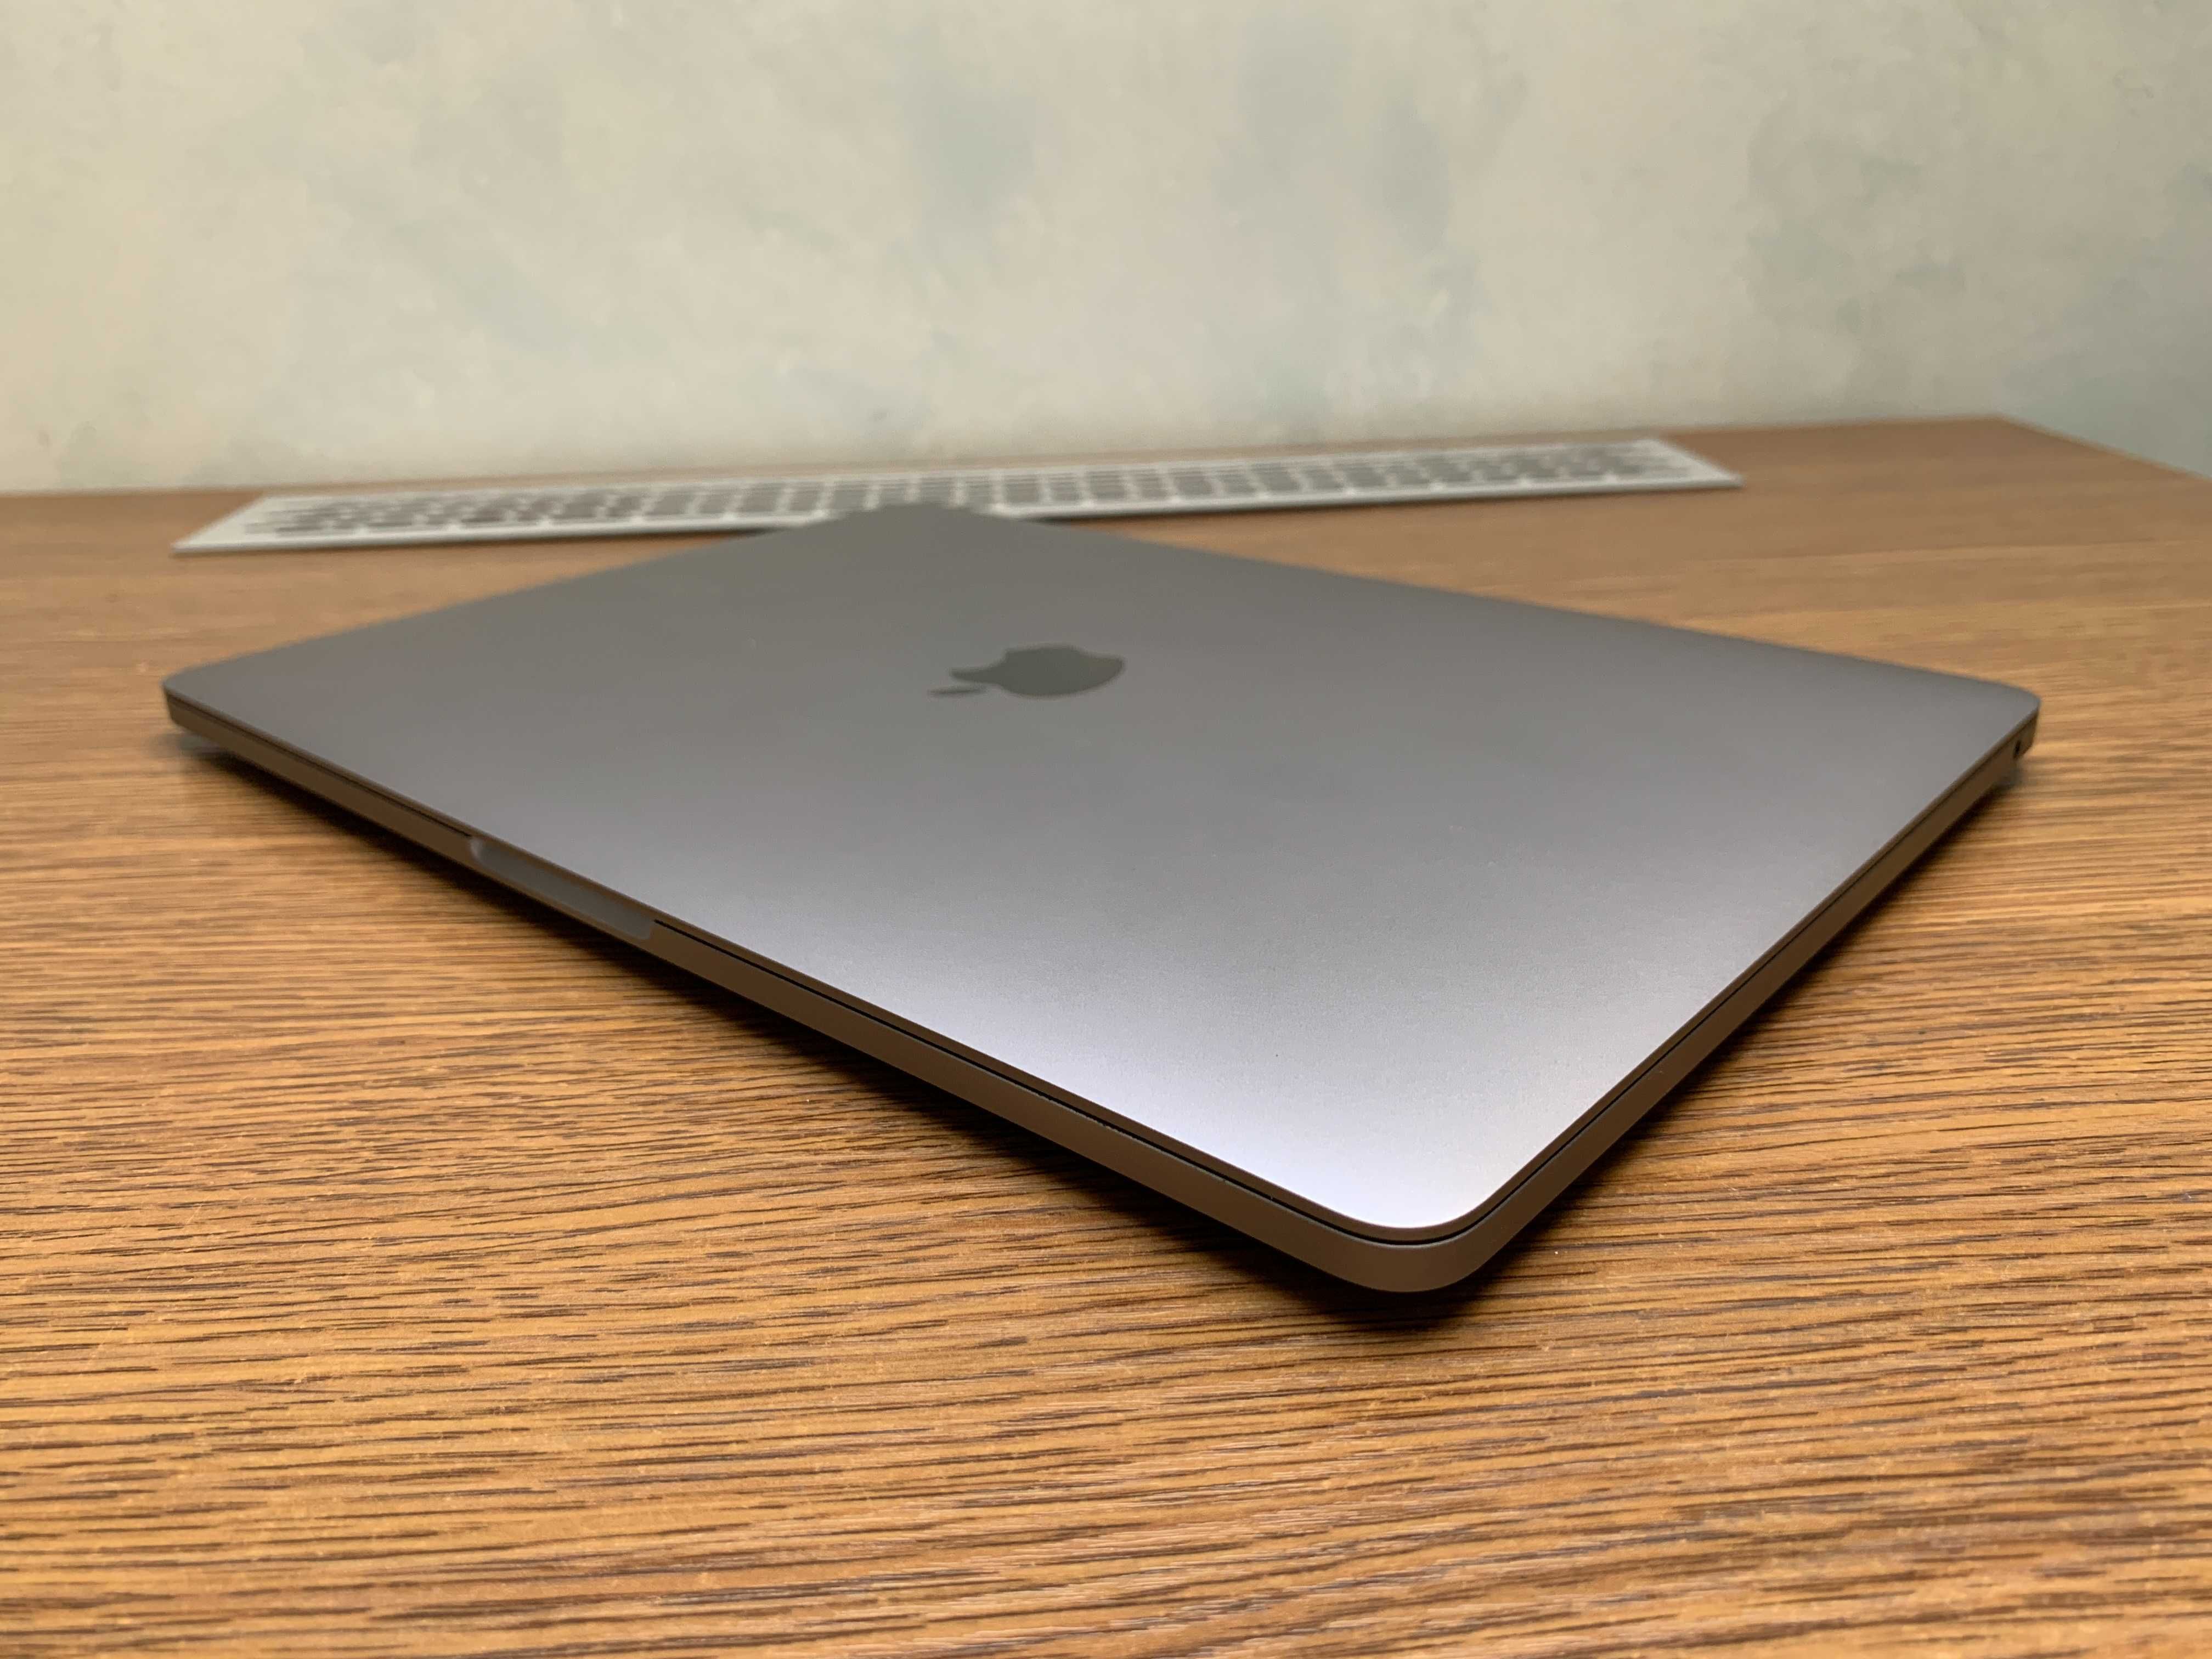 MacBook Pro 13'' 2020 Apple M1 8 gb 256 SSD як Новий